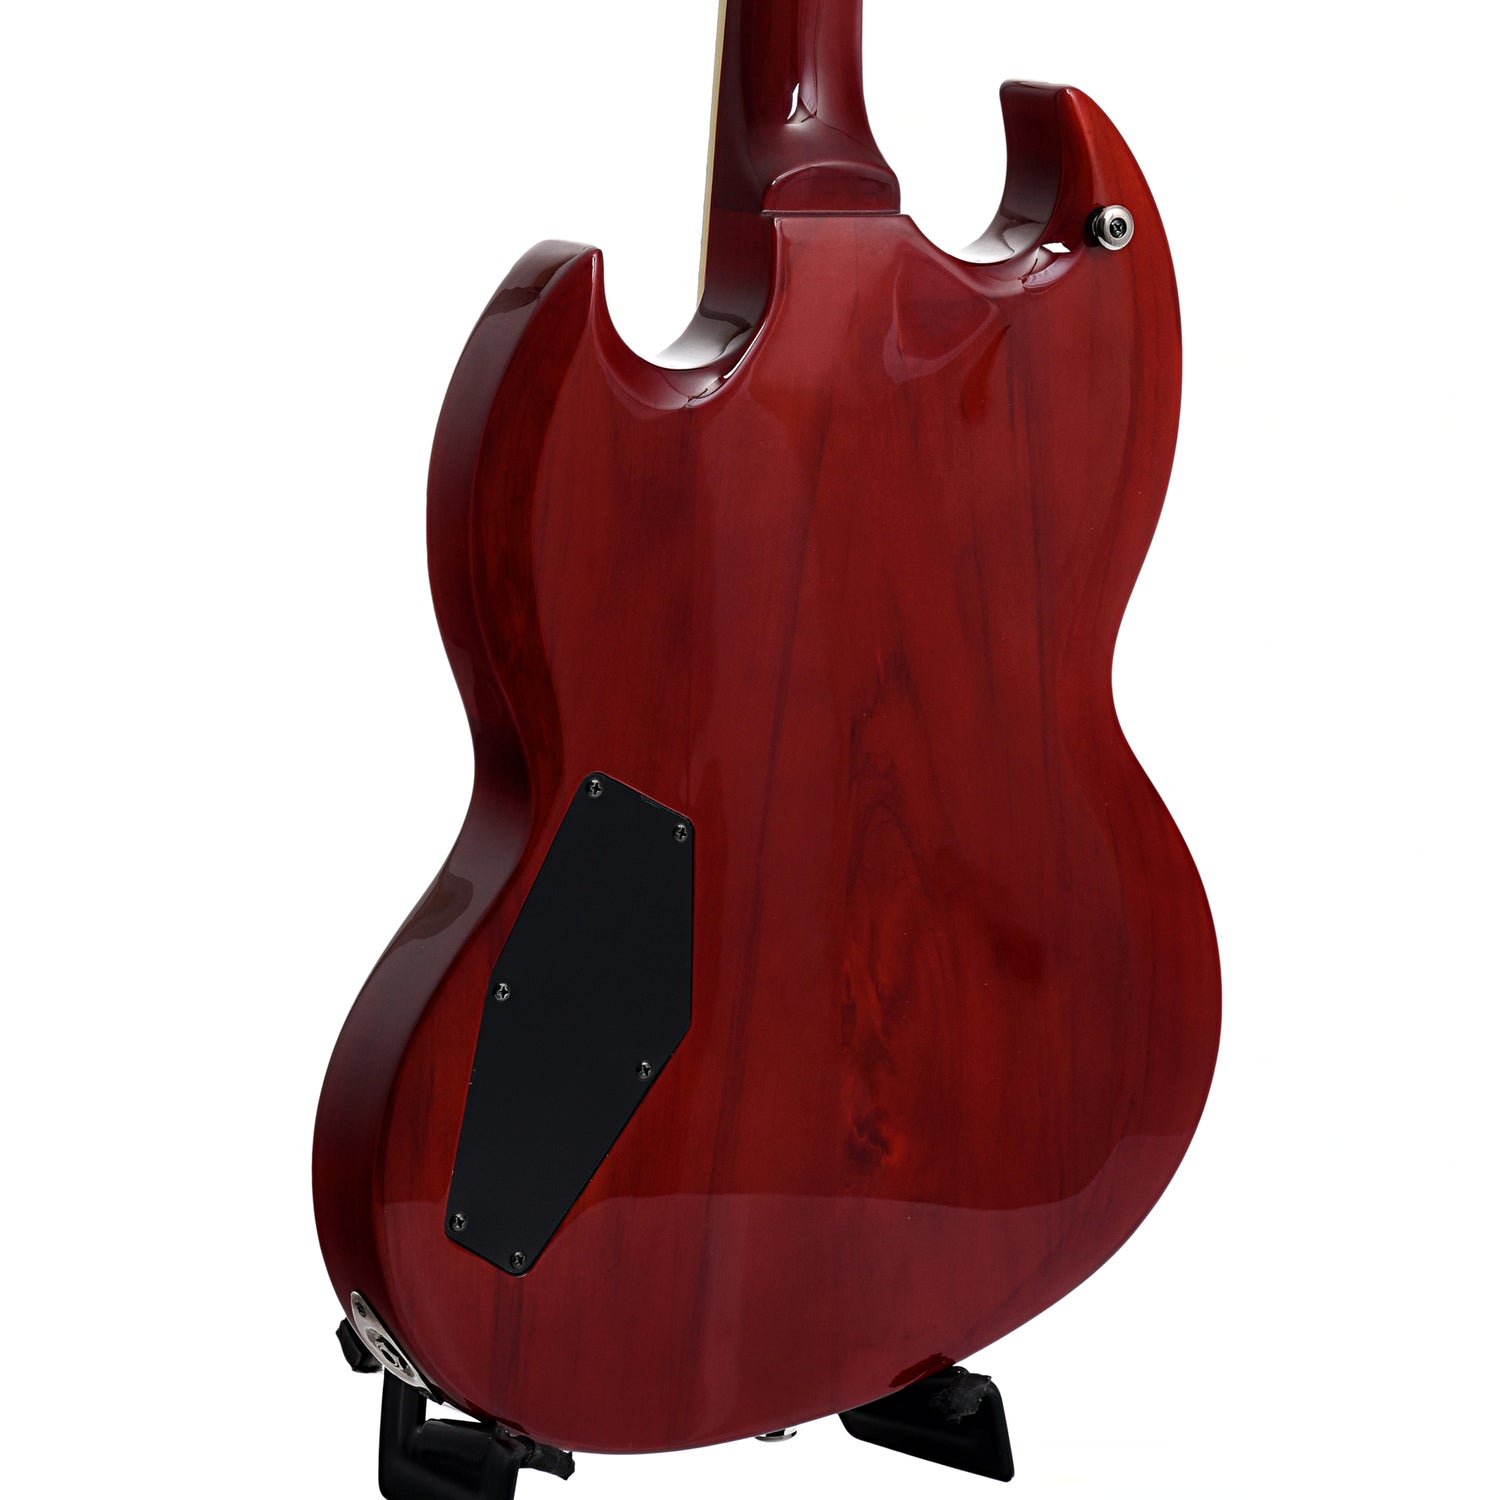 Image 12 of ESP LTD Viper 200FM (2008) - SKU# 30U-208668 : Product Type Solid Body Electric Guitars : Elderly Instruments